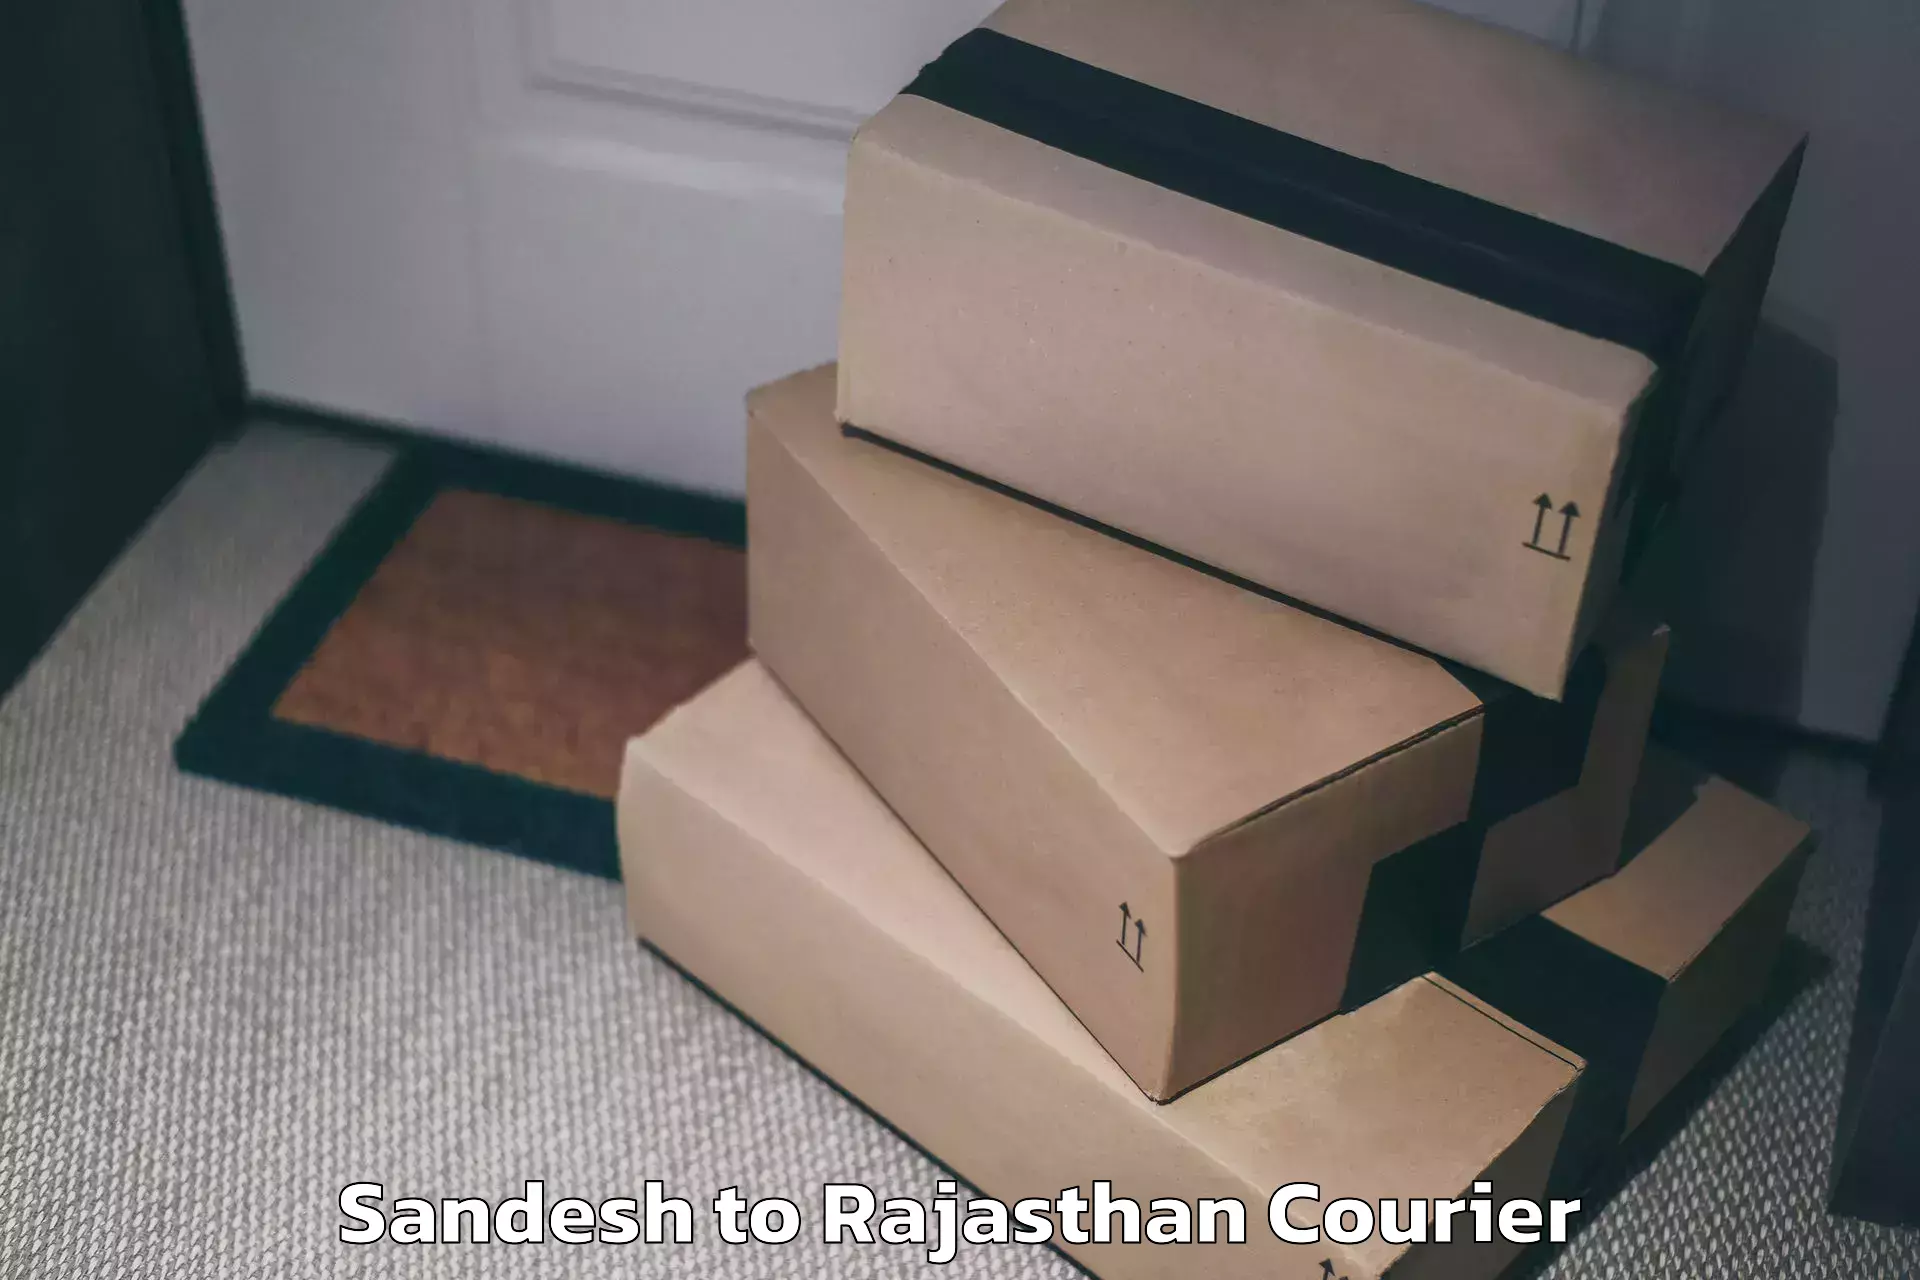 Luggage shipment specialists Sandesh to Merta